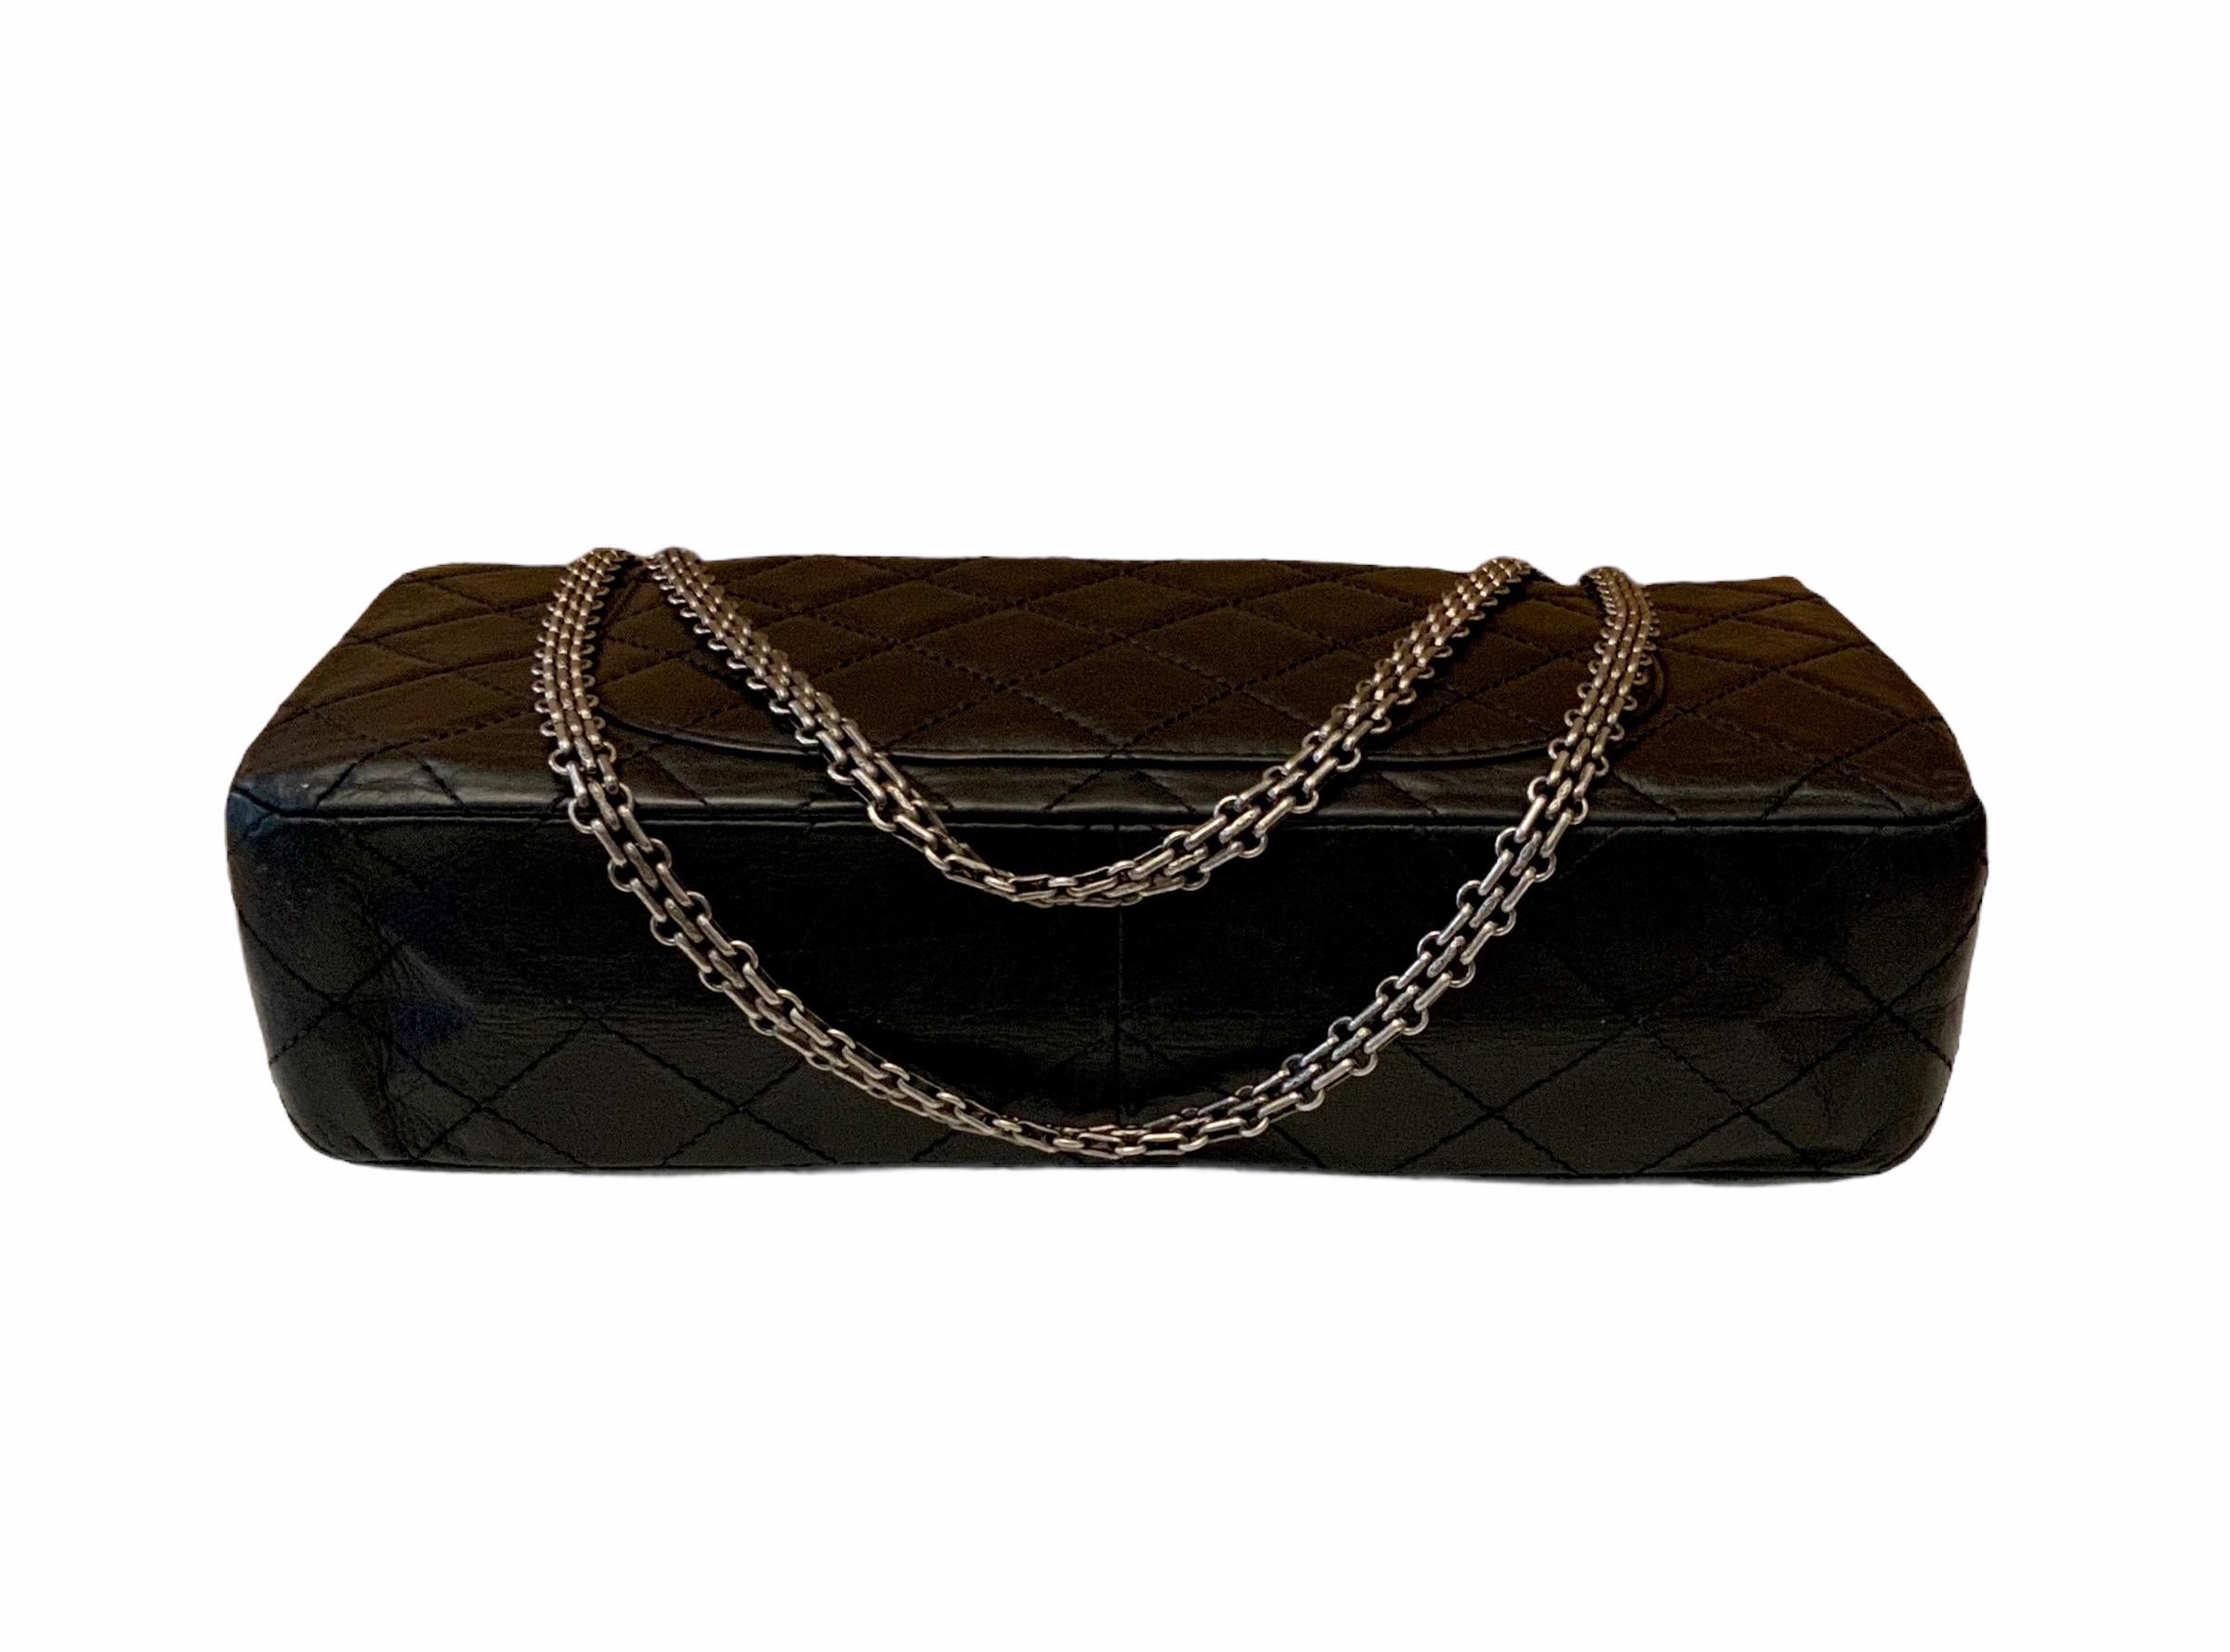 Chanel 2.55 Reissue Black Leather 227 Bag 4